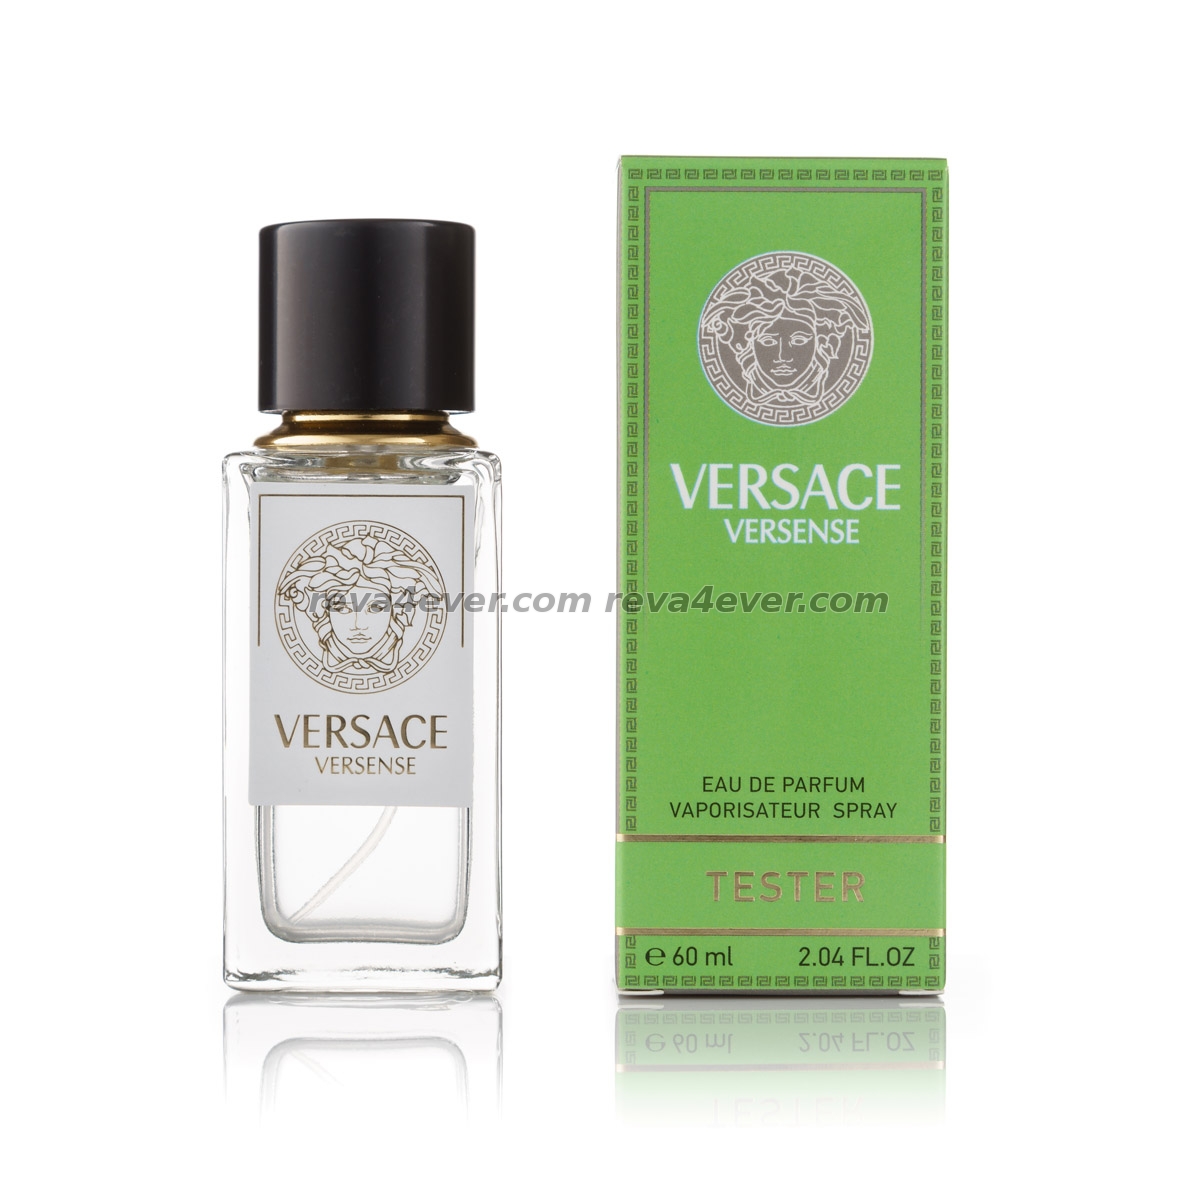 Versace Versense 60ml color tester